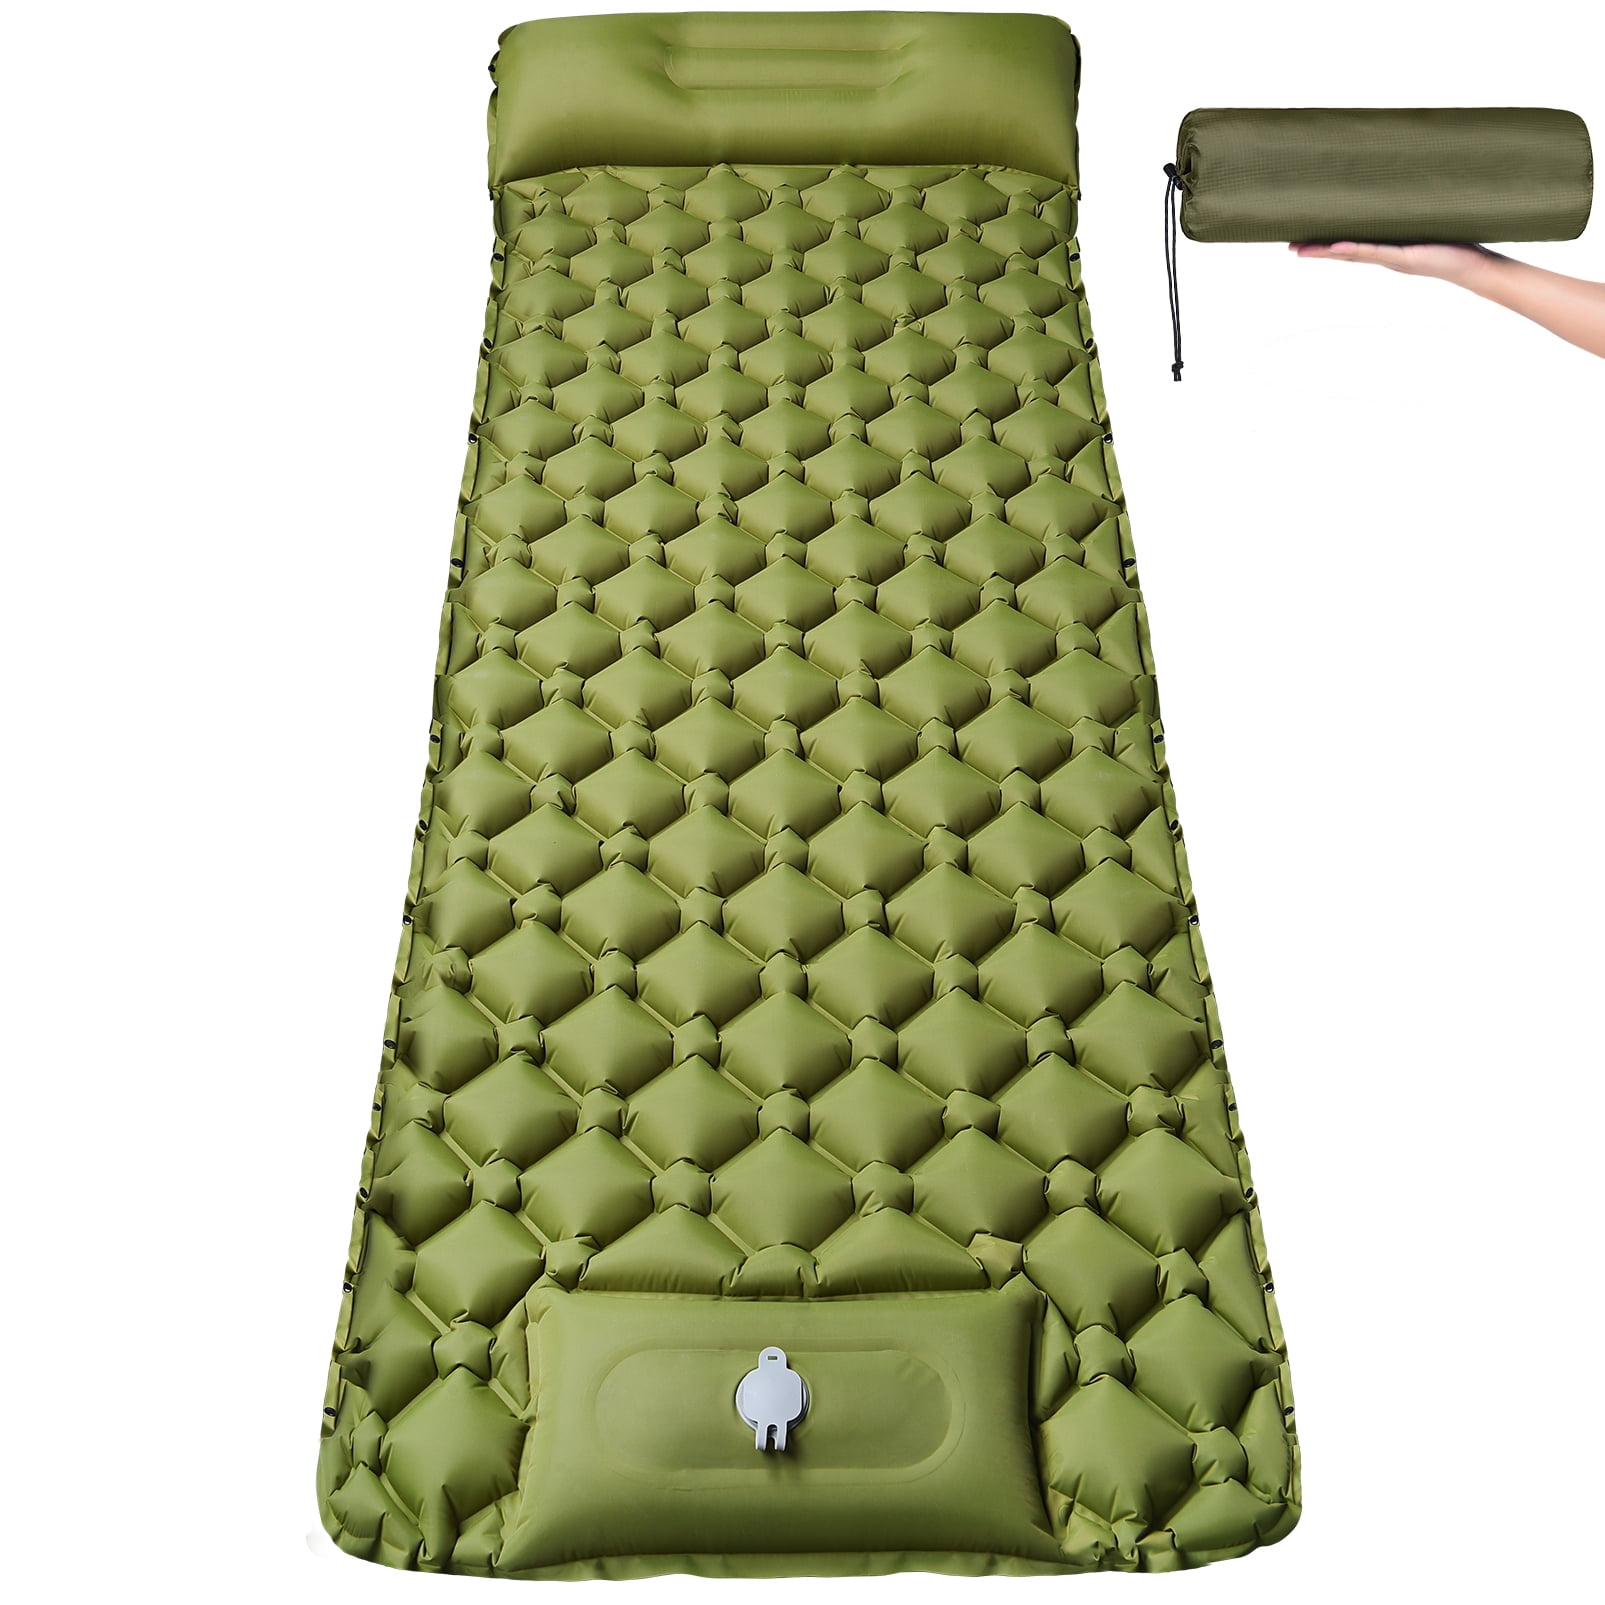 Self Inflating Sleeping Pad Ultralight Camping Hiking Inflatable Air Mattress 